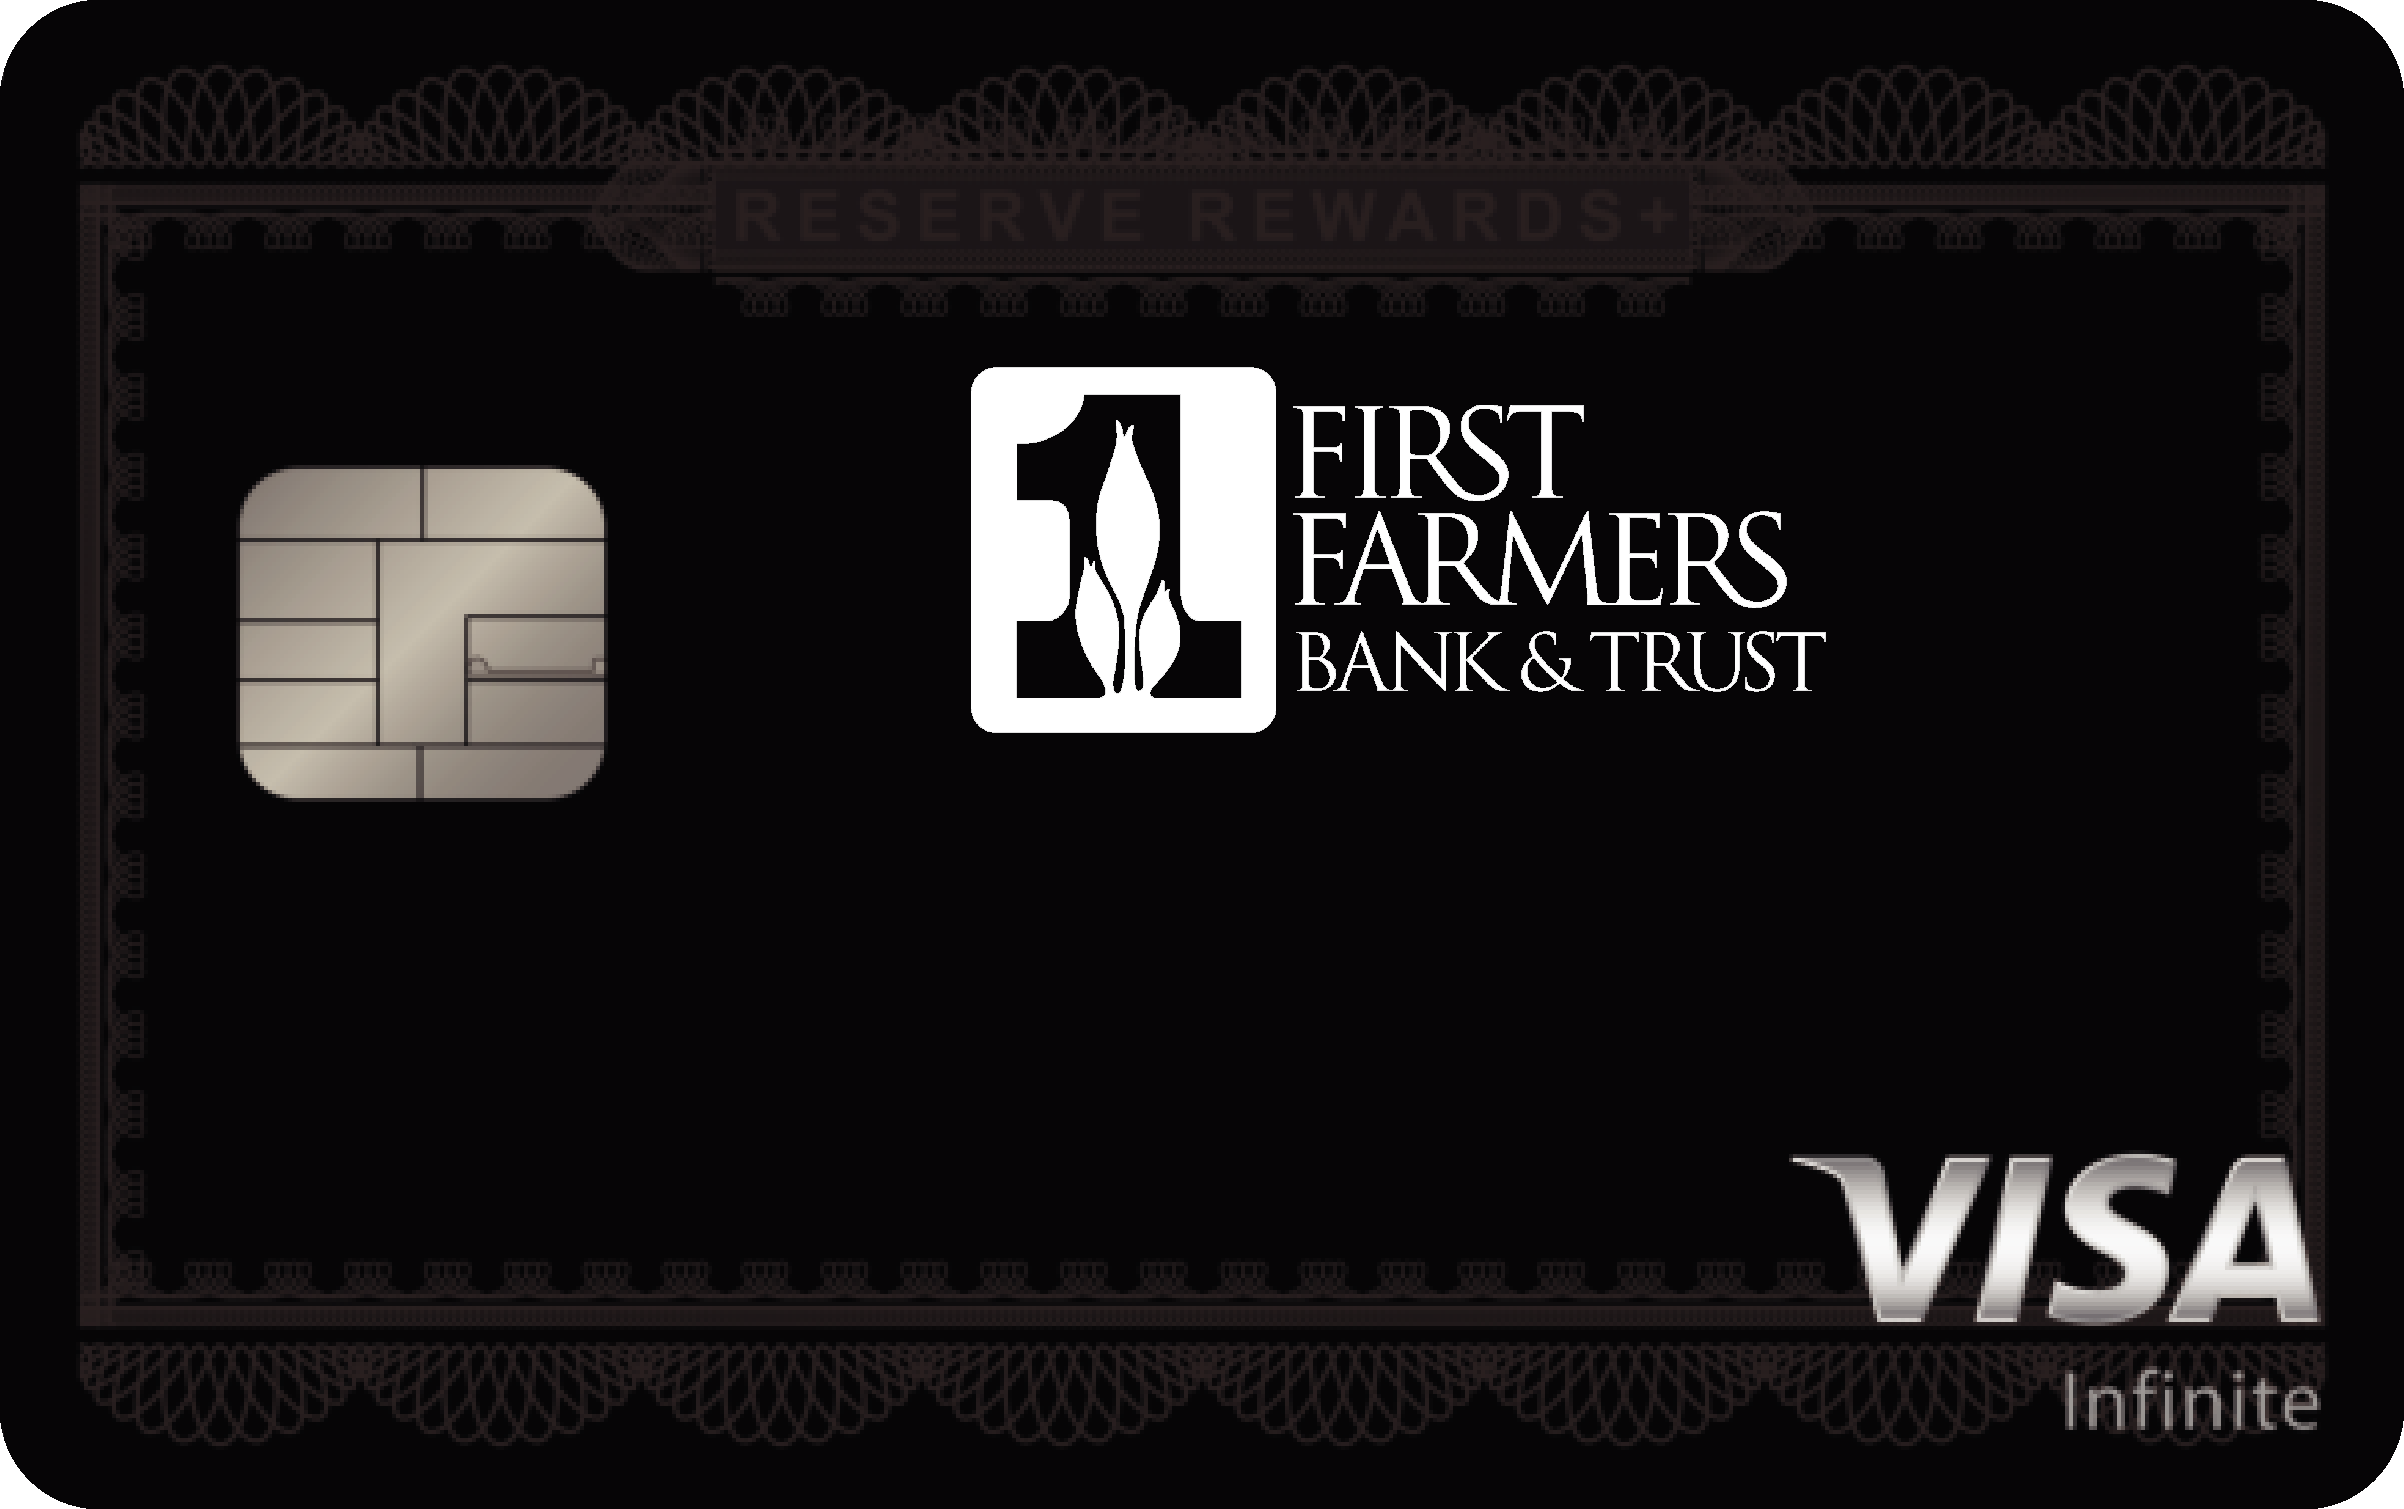 First Farmers Bank & Trust